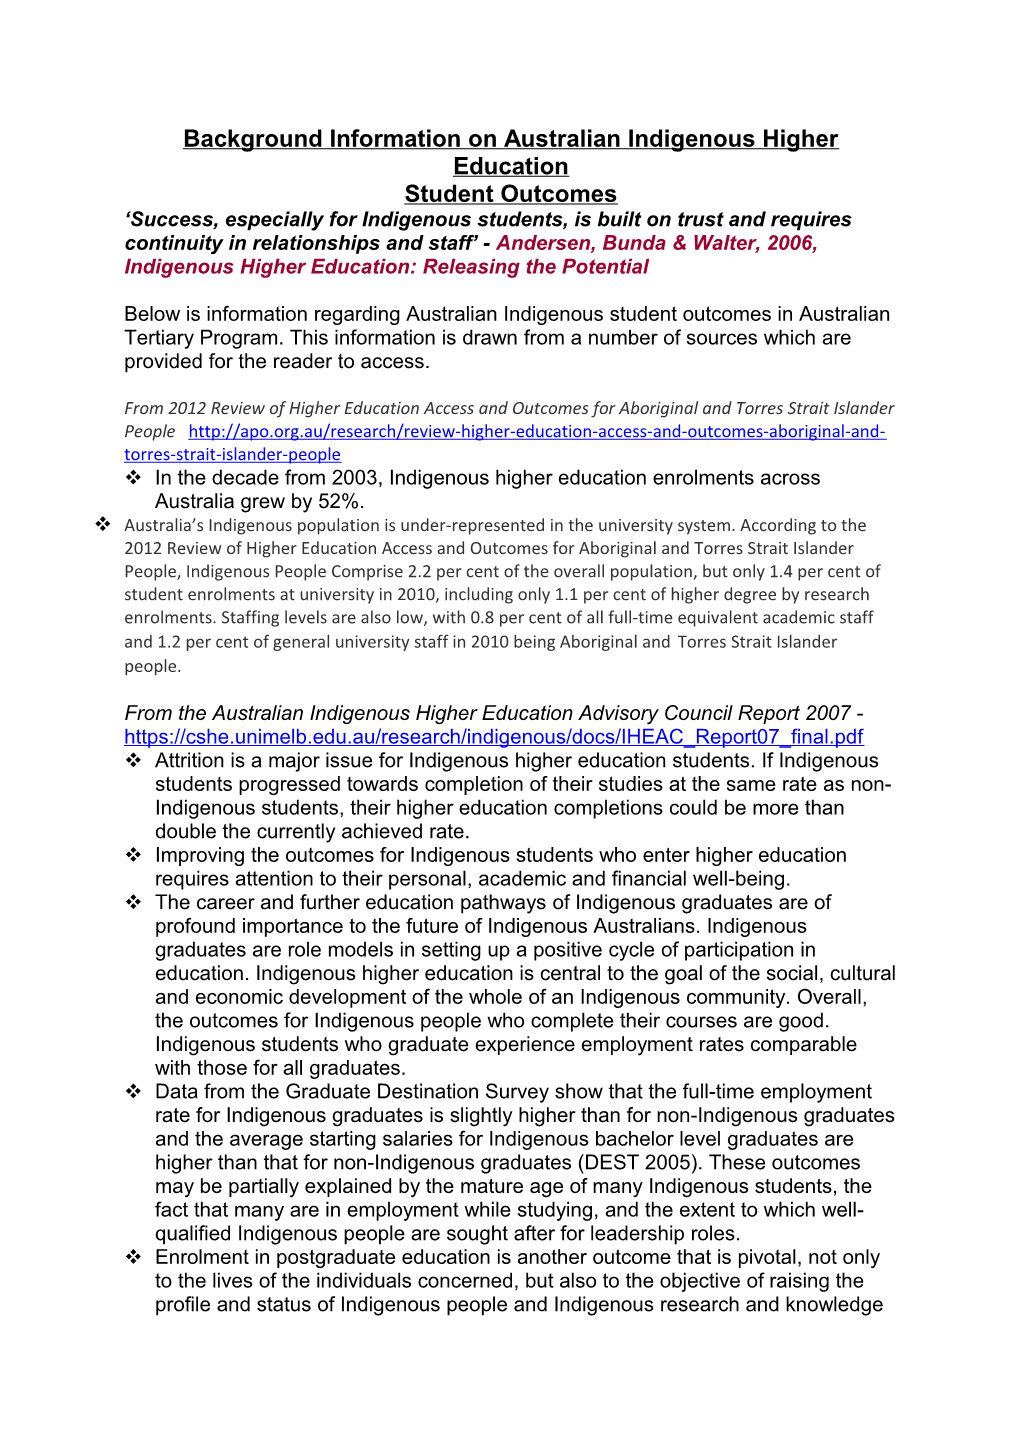 Background Information on Australian Indigenous Higher Education